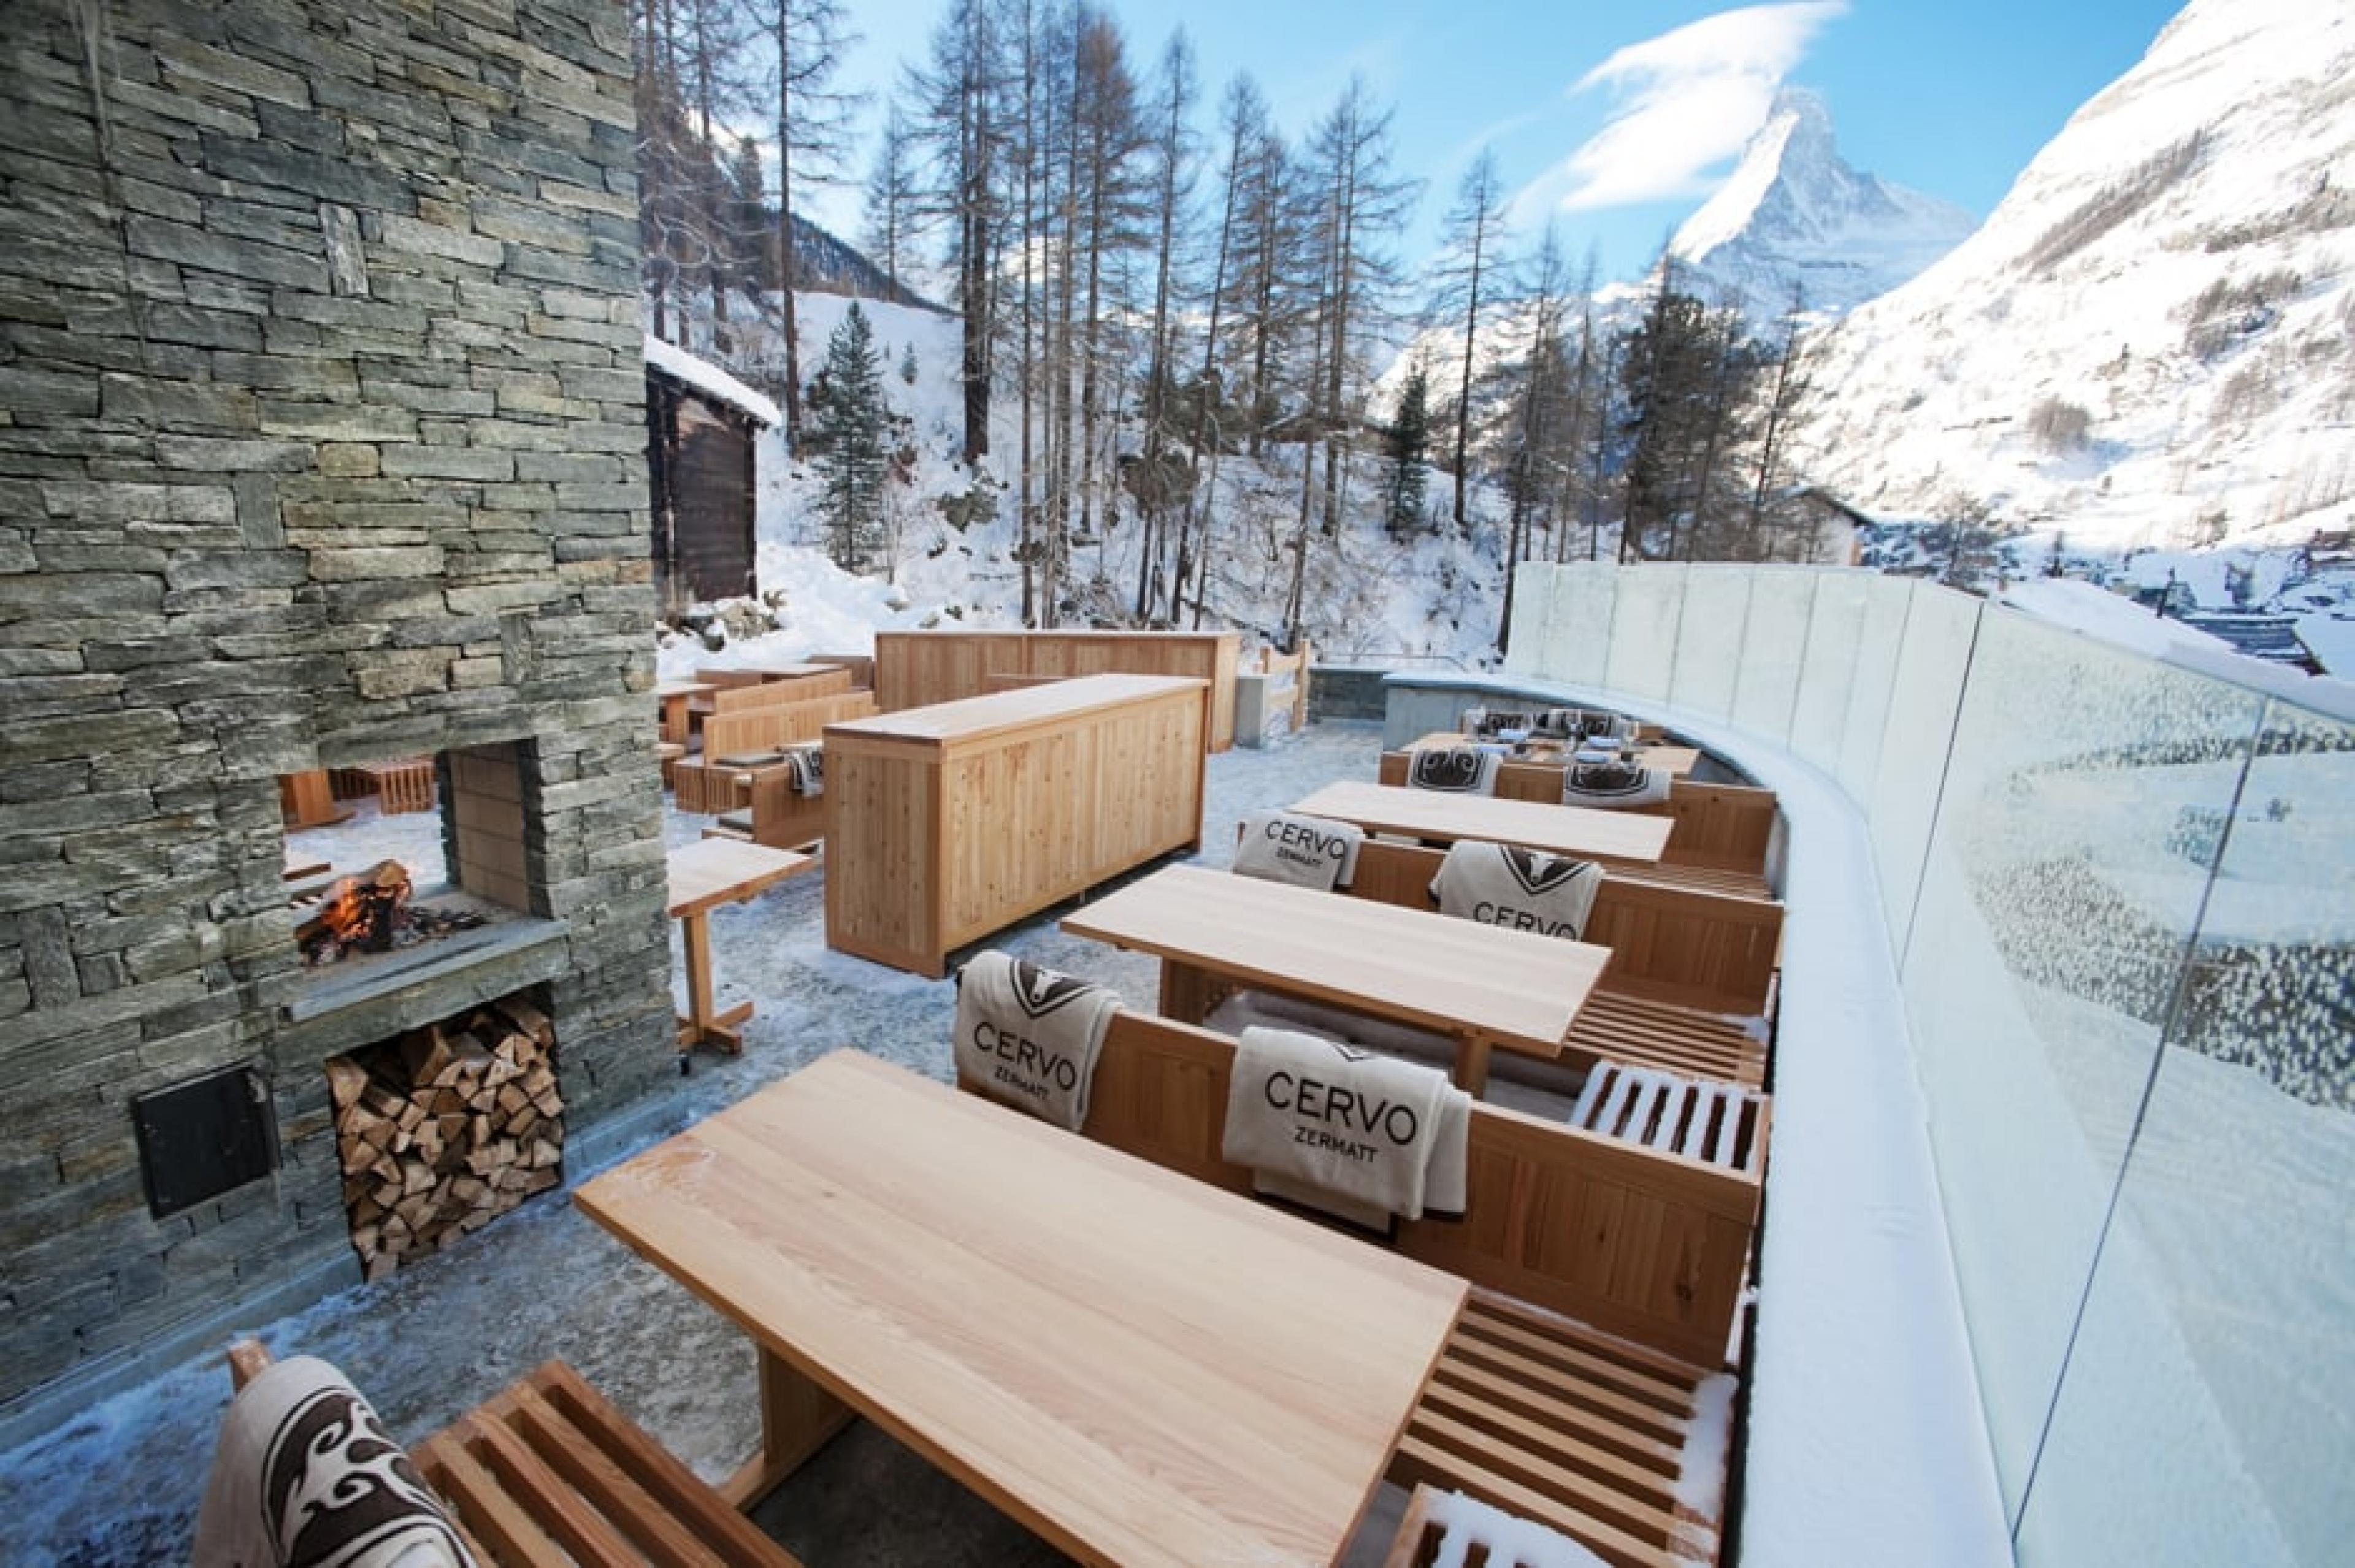 Interiors at Restaurant Cervo, Zermatt, Switzerland